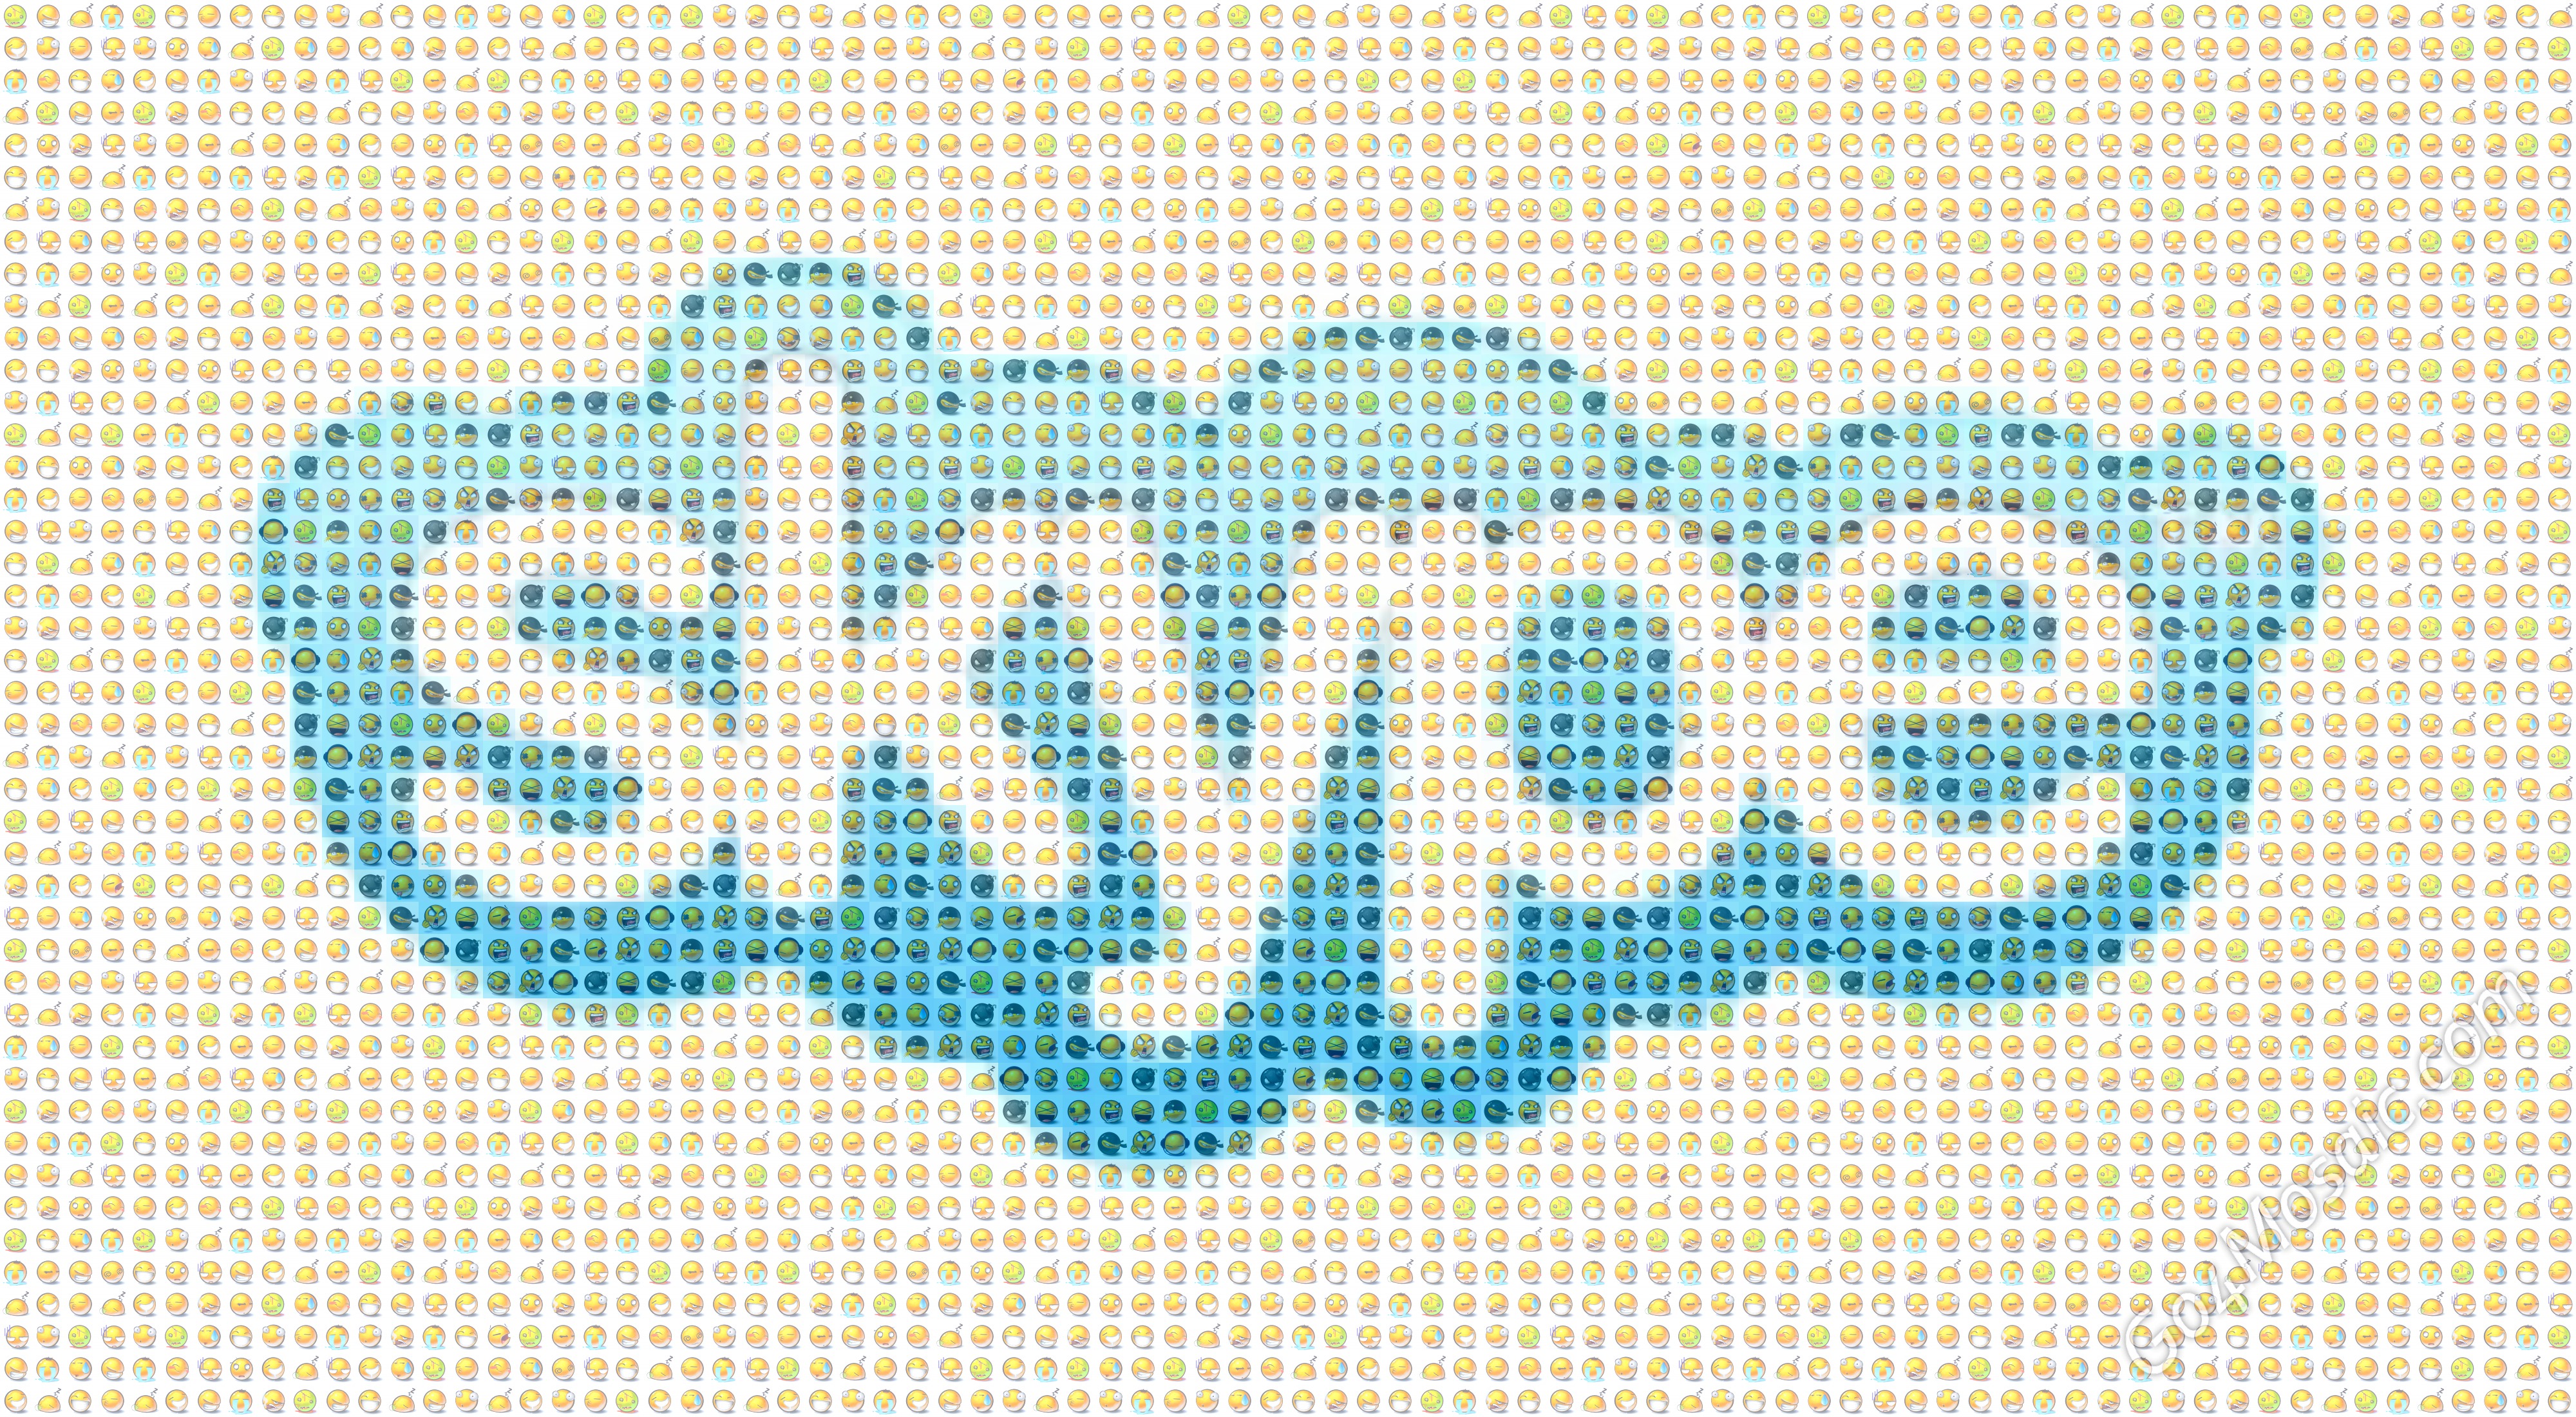 Skype Logo mosaic from 3520 Smileys